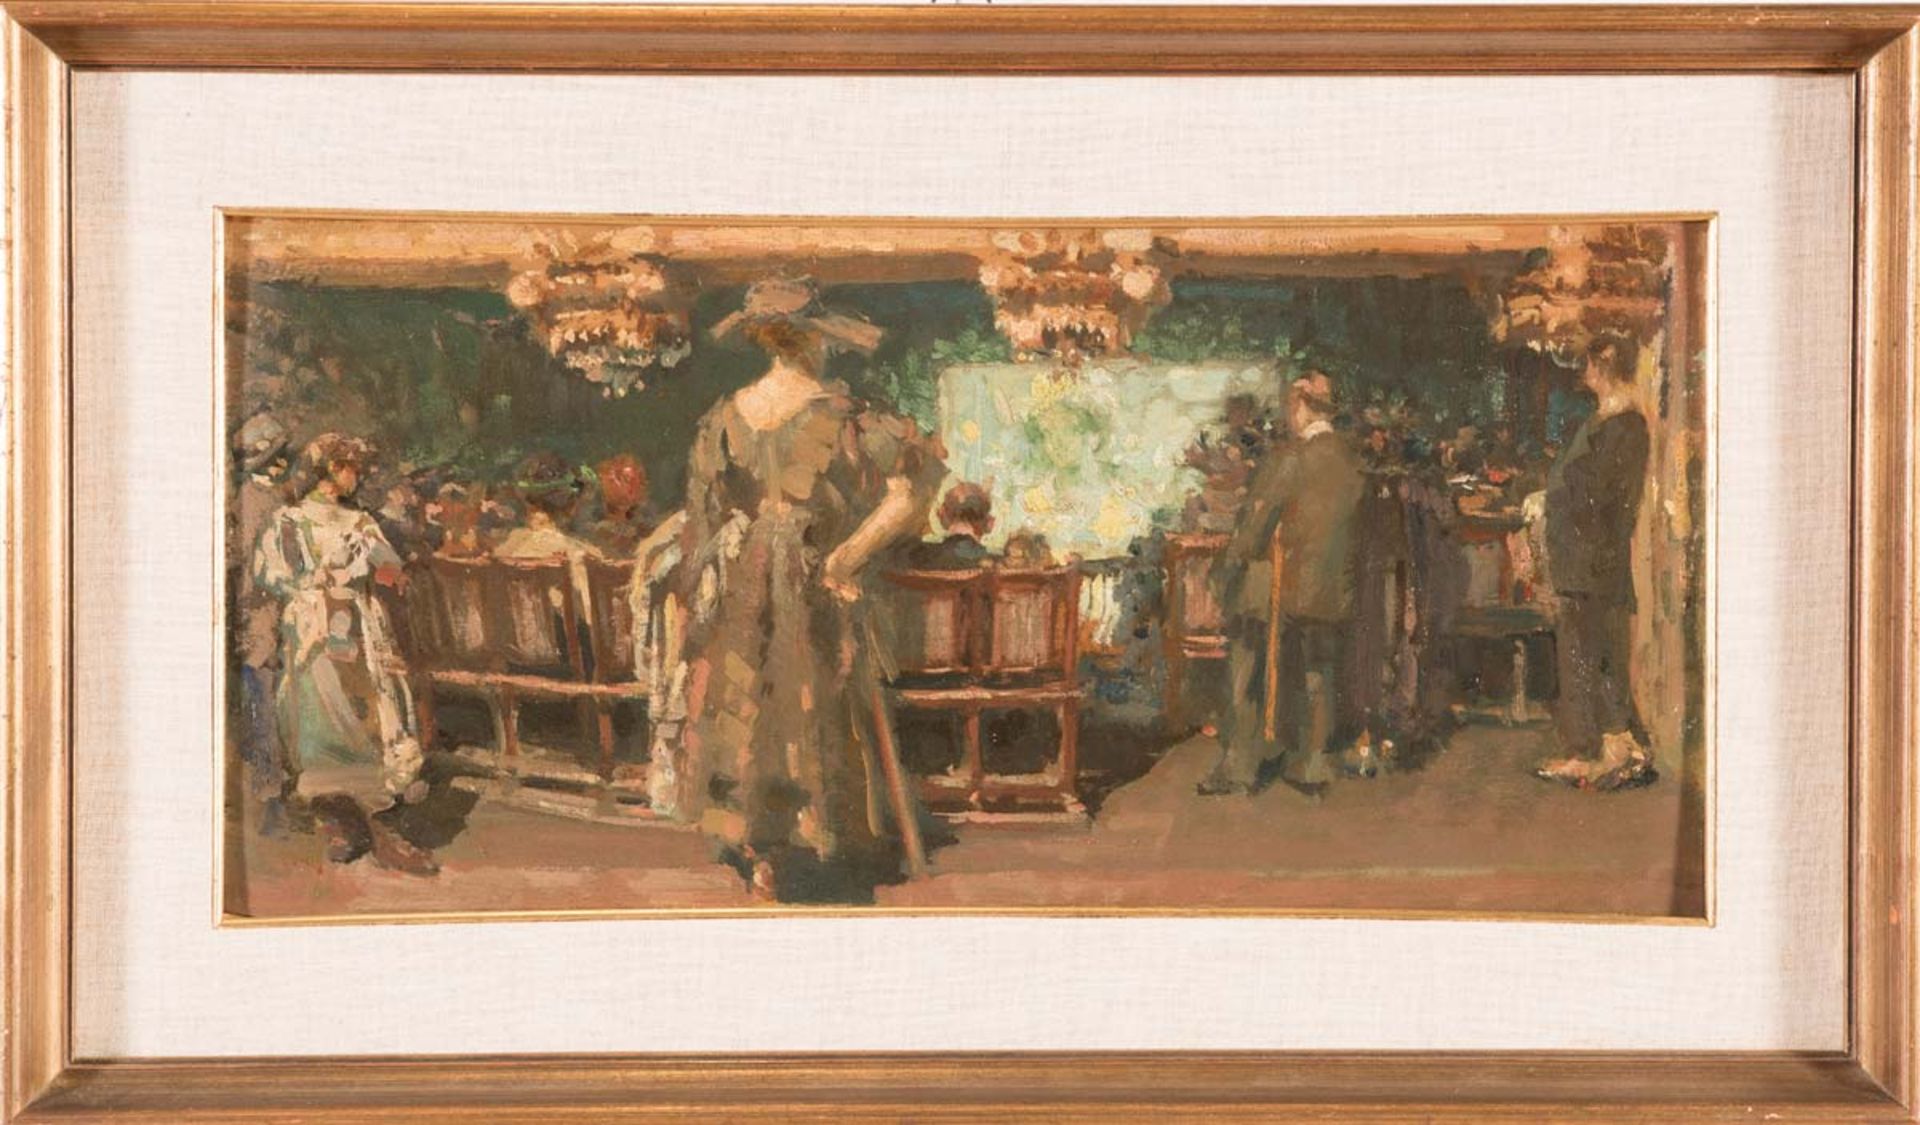 Late 19th Century - early 20th Century Painter, "Al cinema".